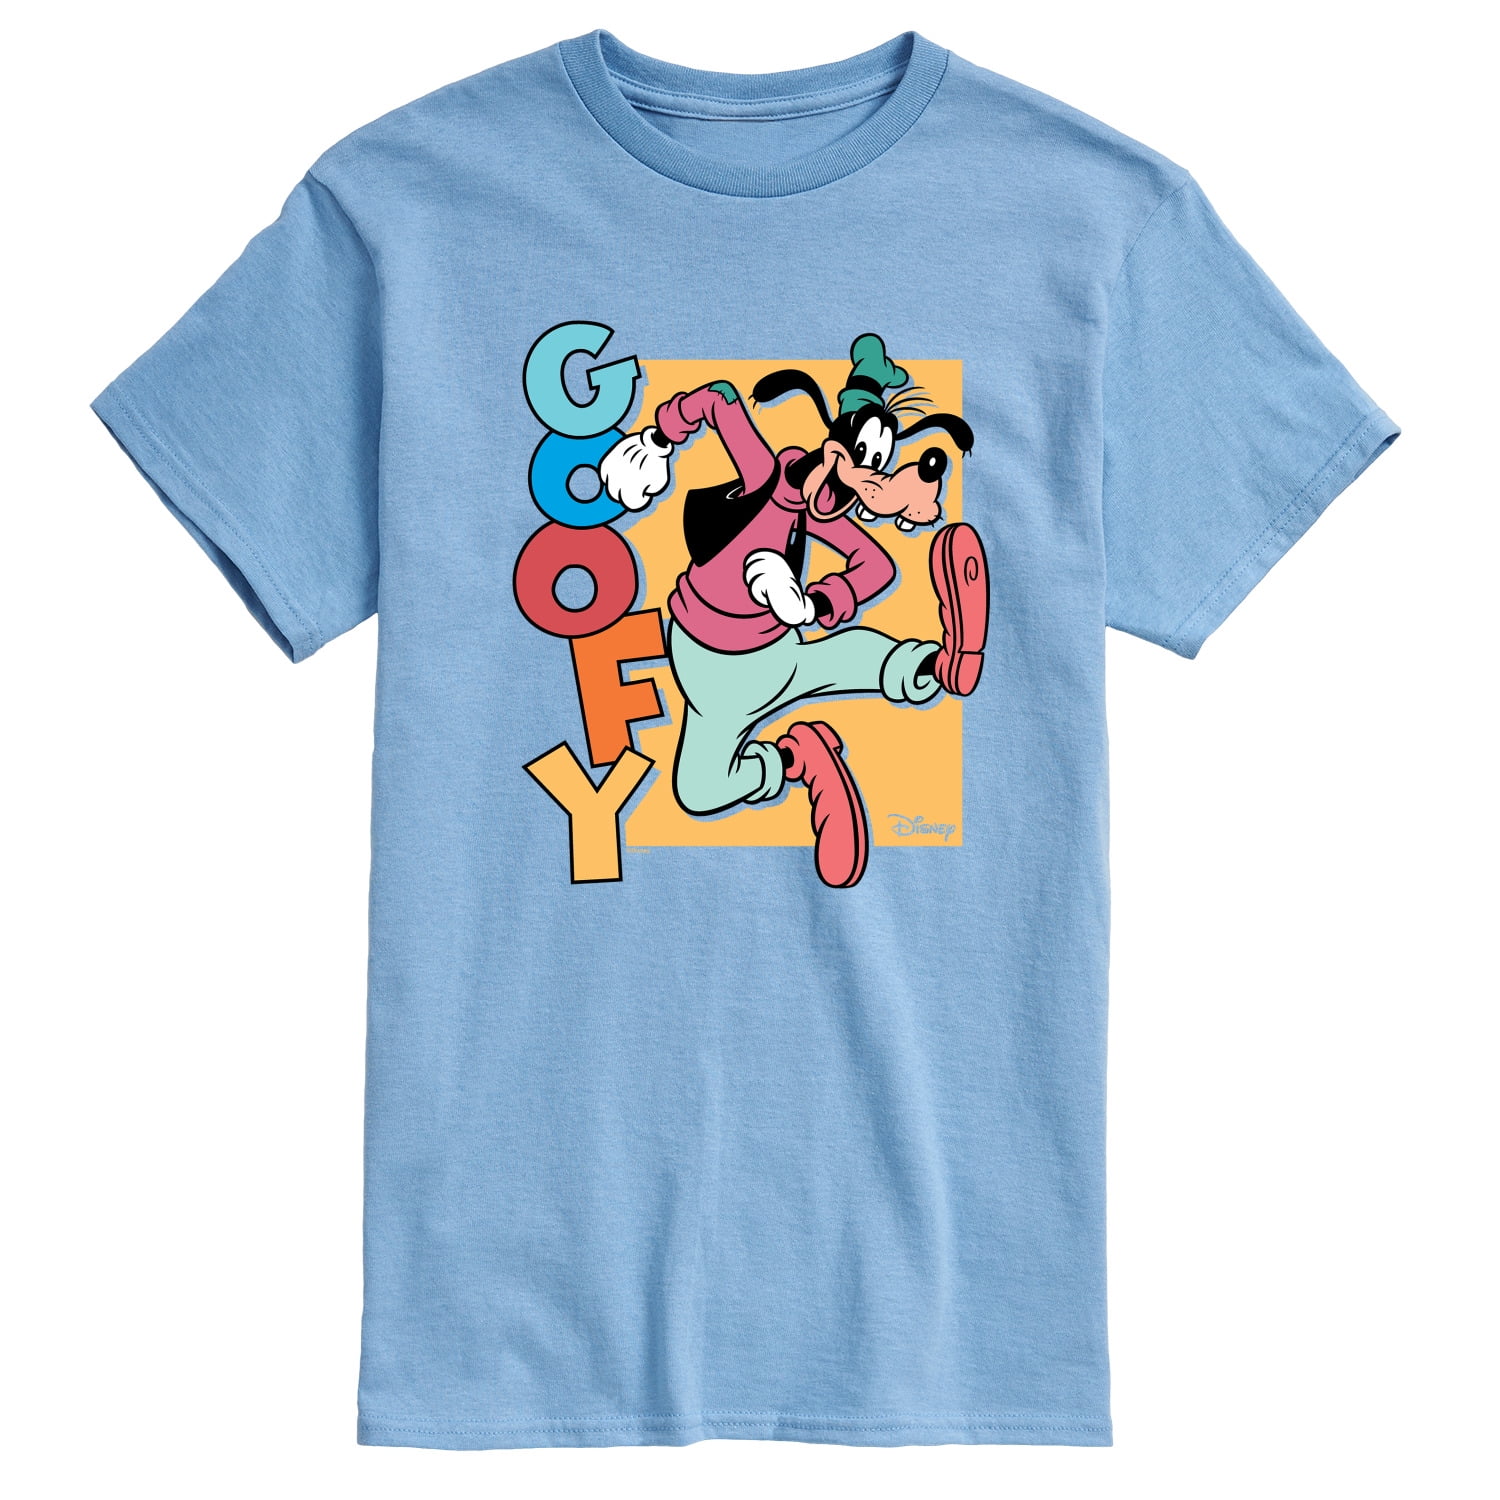 Disney - Goofy - Men's Short Sleeve Graphic T-Shirt 